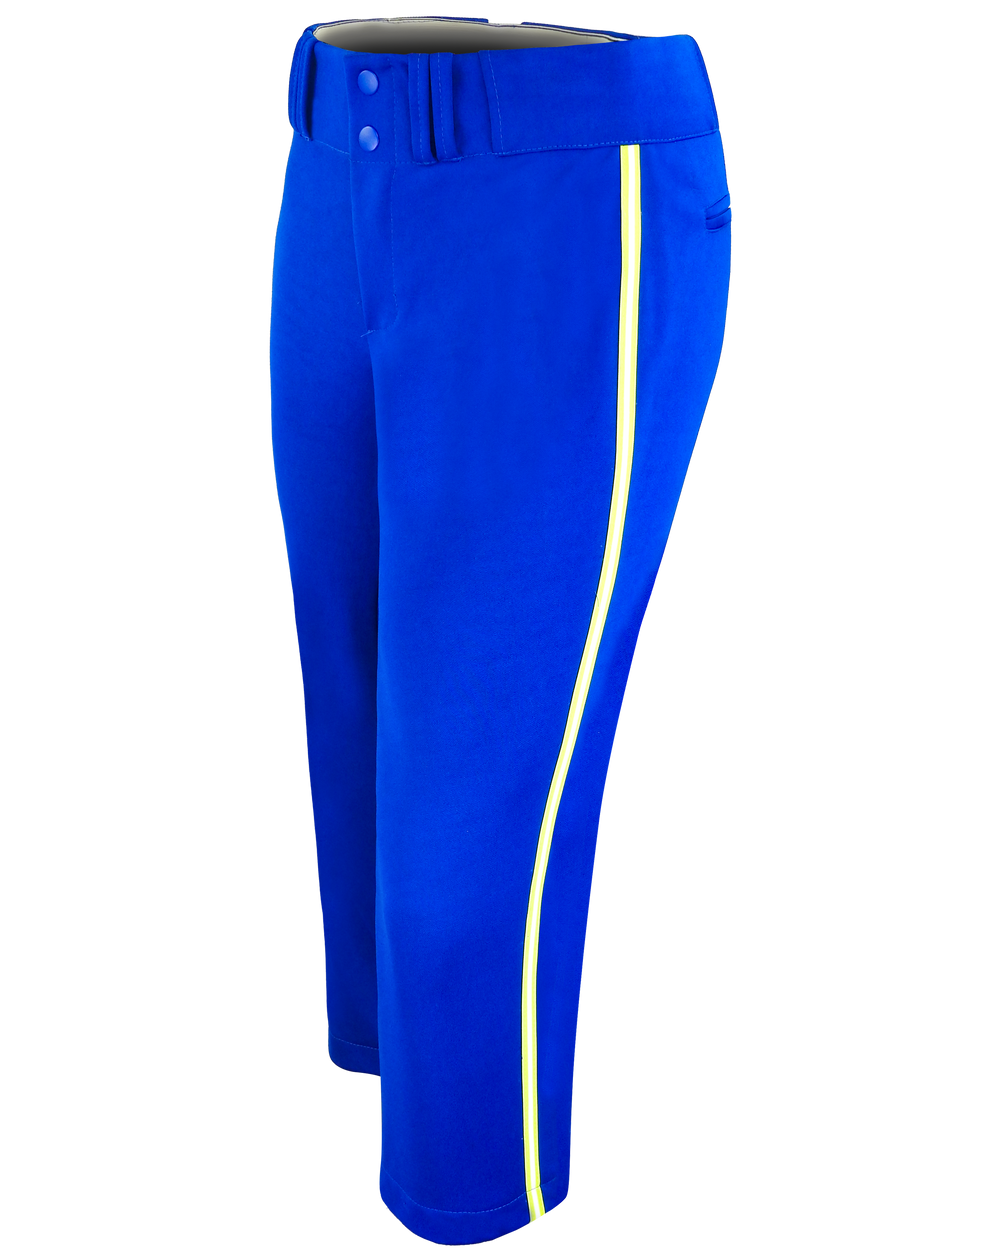 Dyed Lowrise Softball Pants W/ Braiding